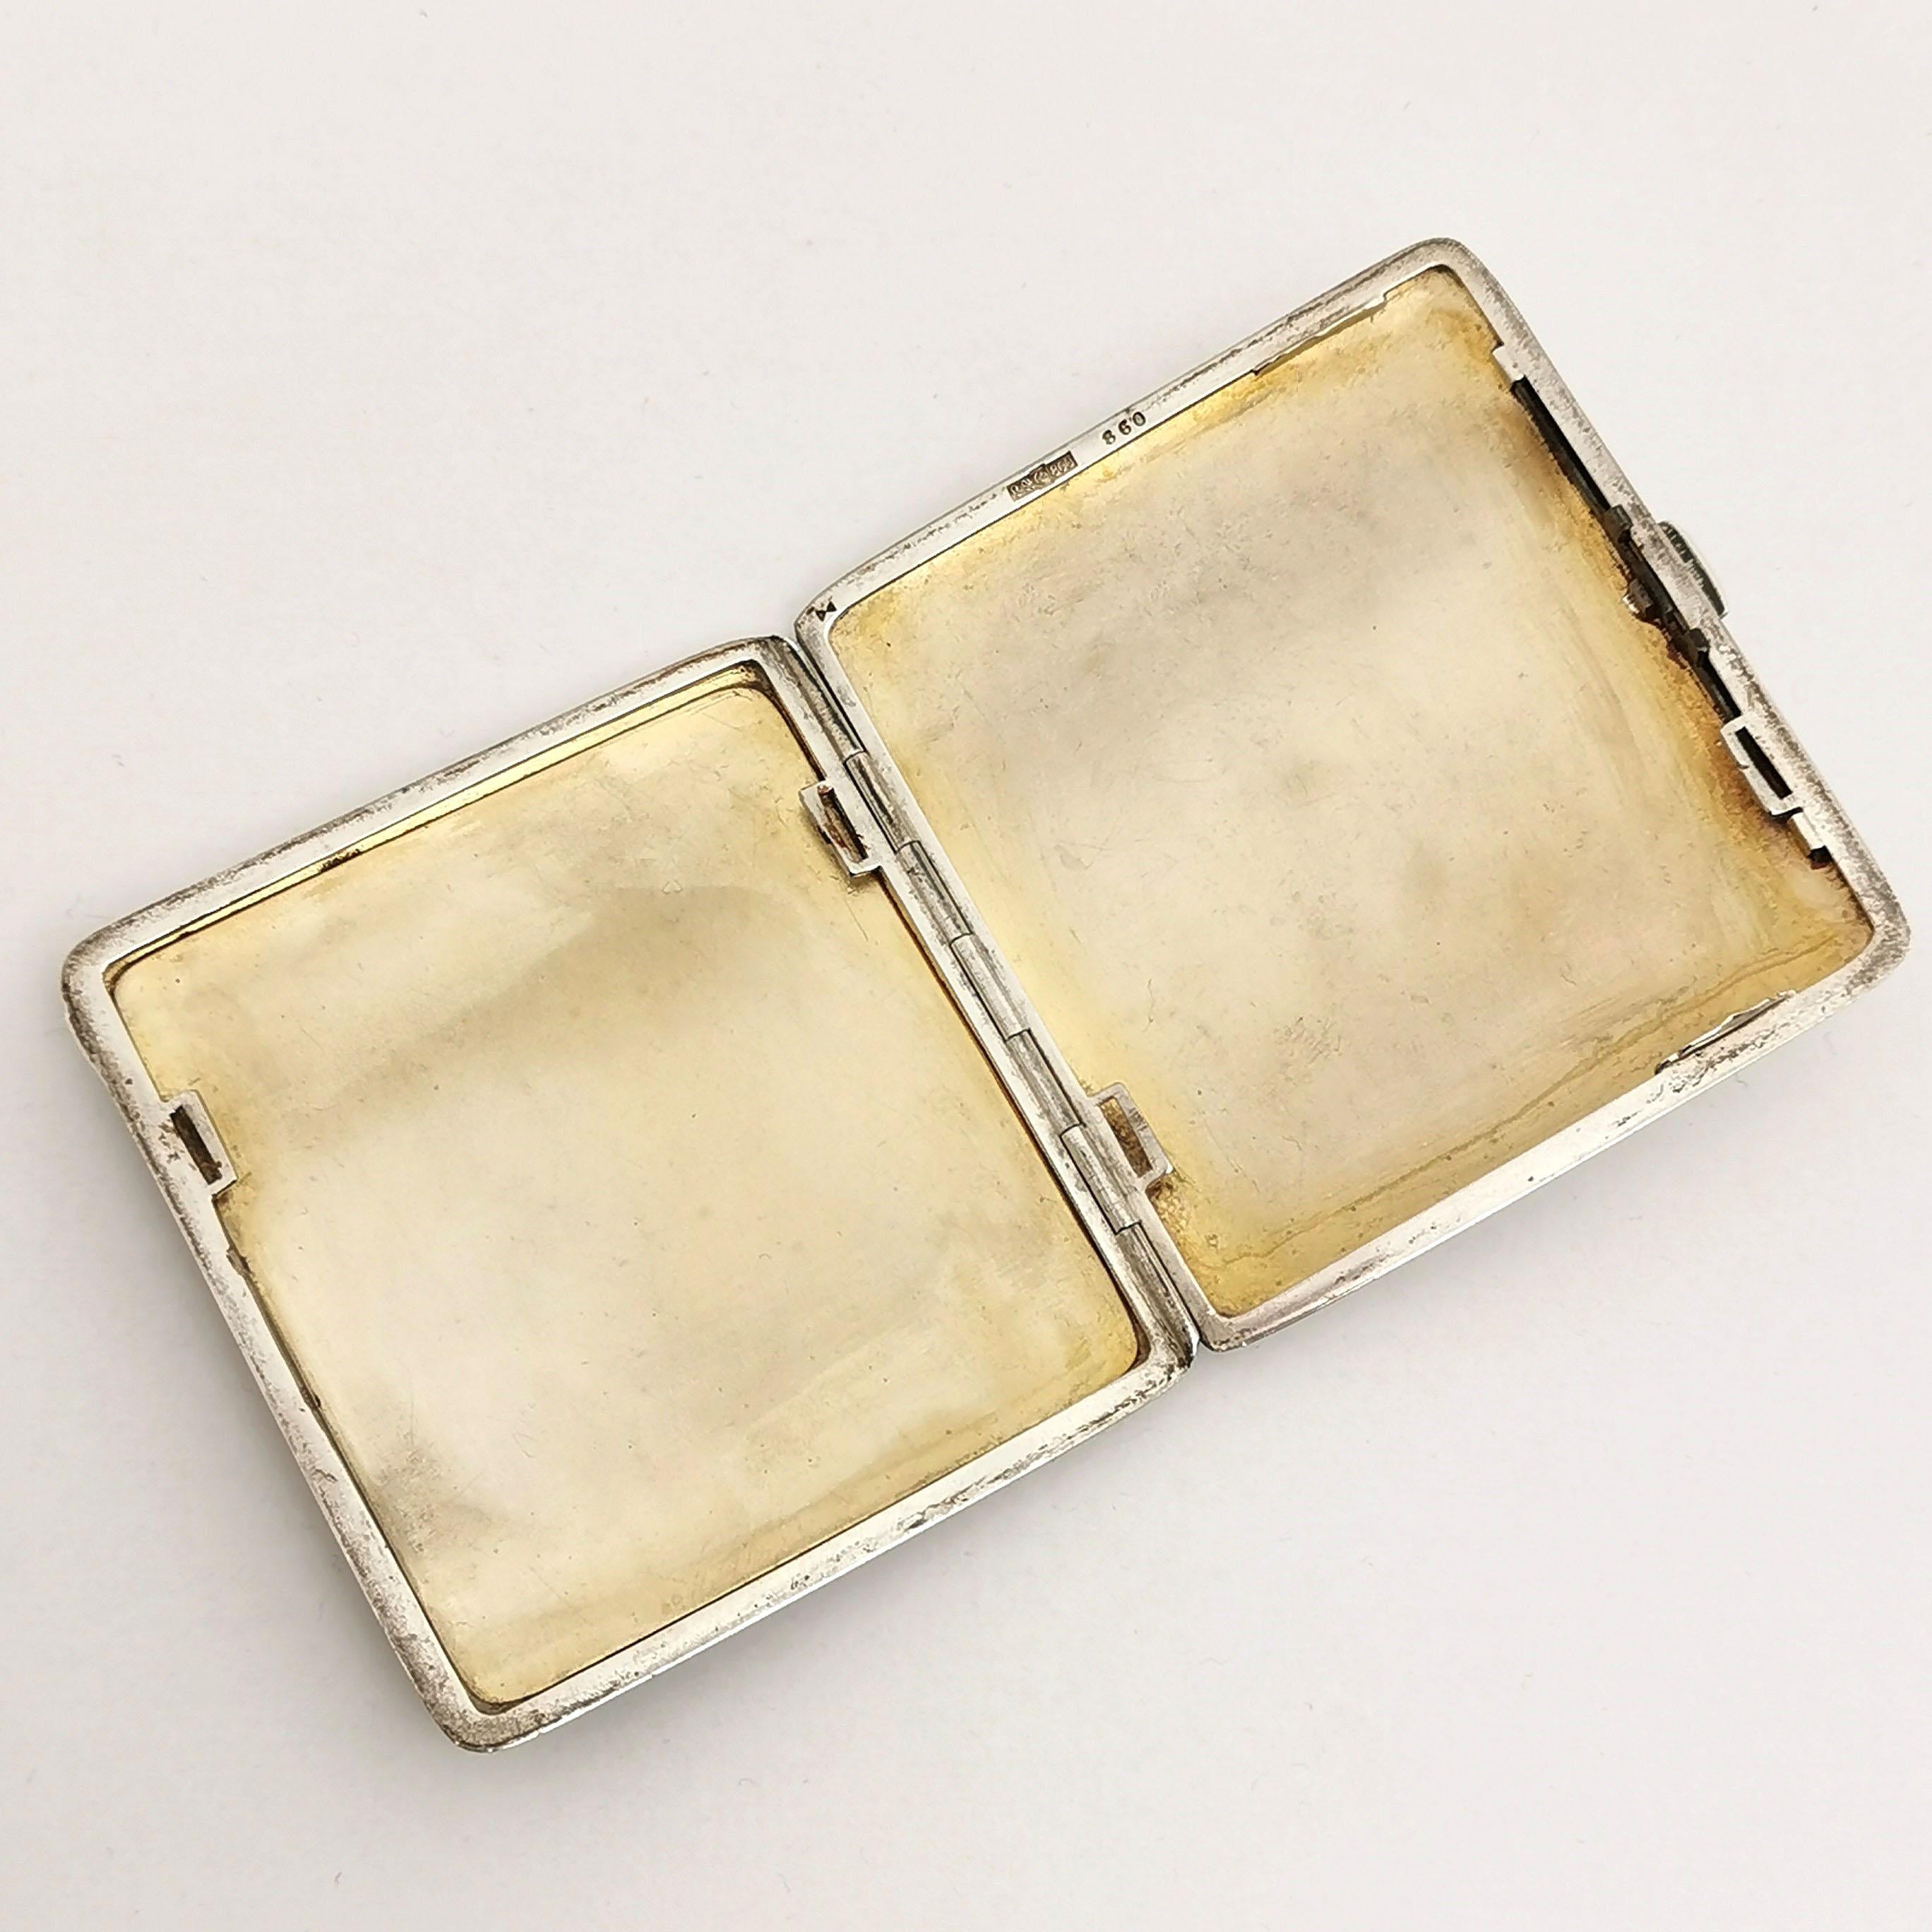 Antique German Solid Silver and Enamel Erotic Cigarette Case c. 1900 For Sale 2